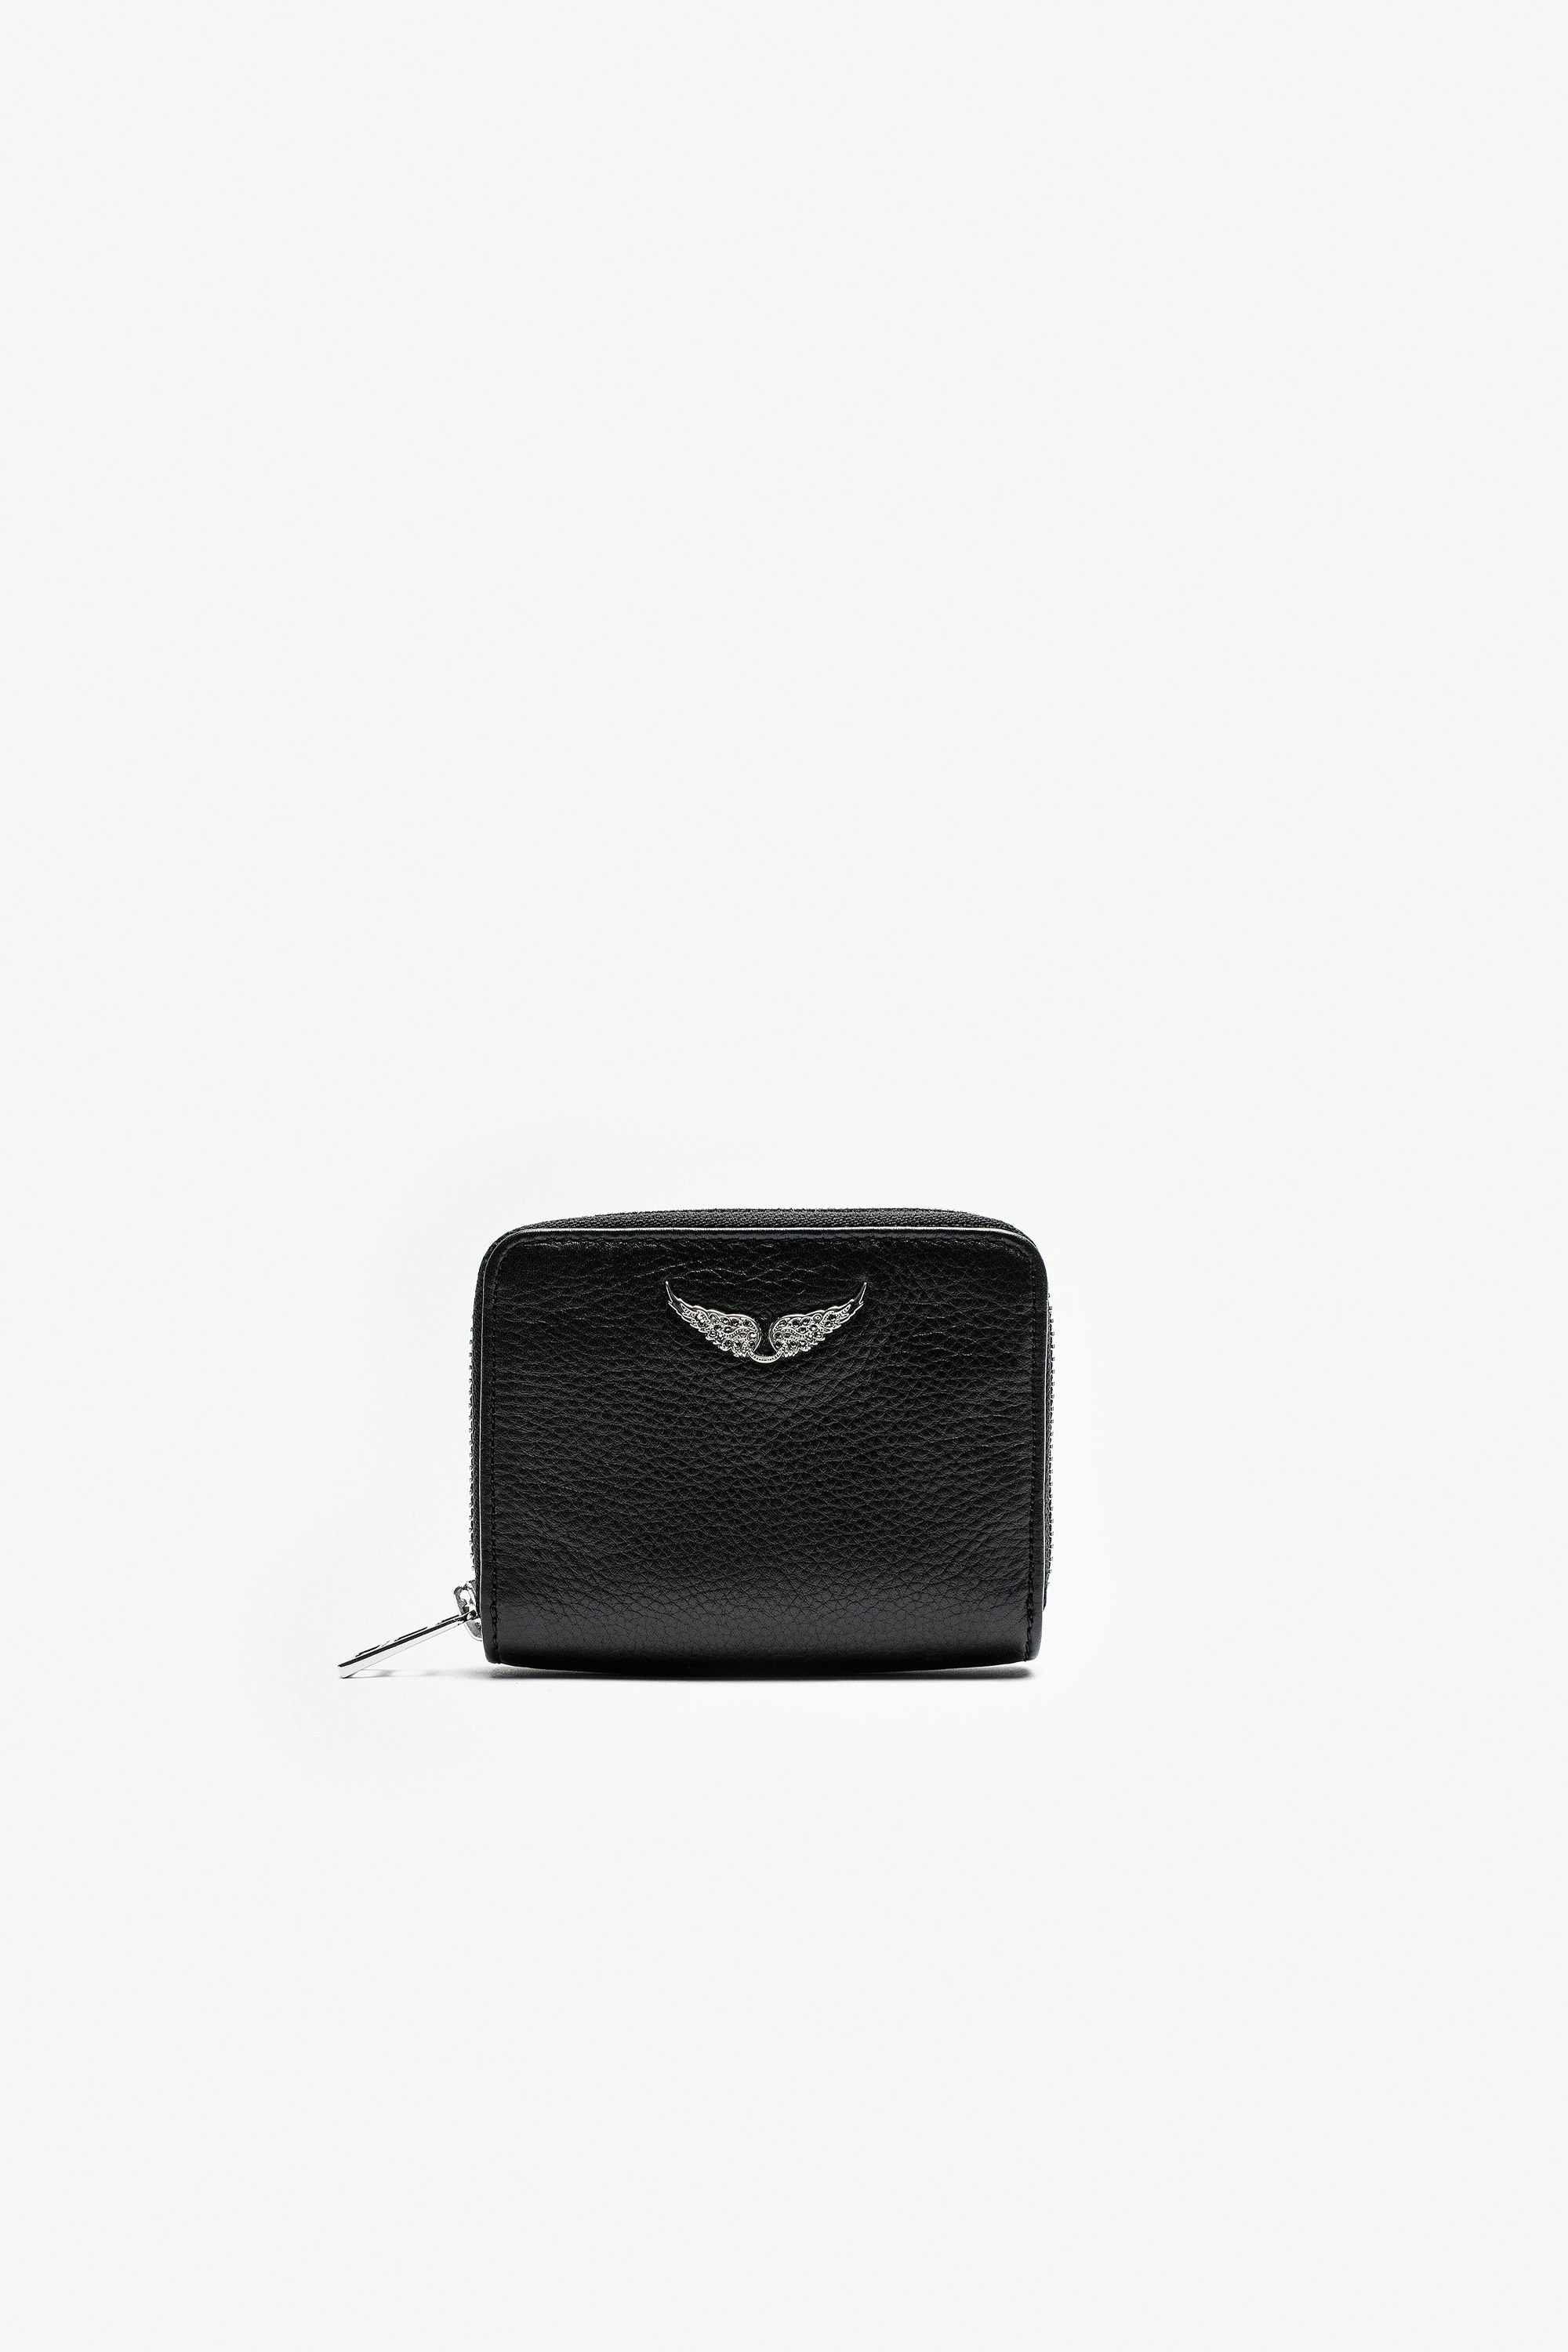 Mini ZV Wallet Mini ZV women’s black leather purse.